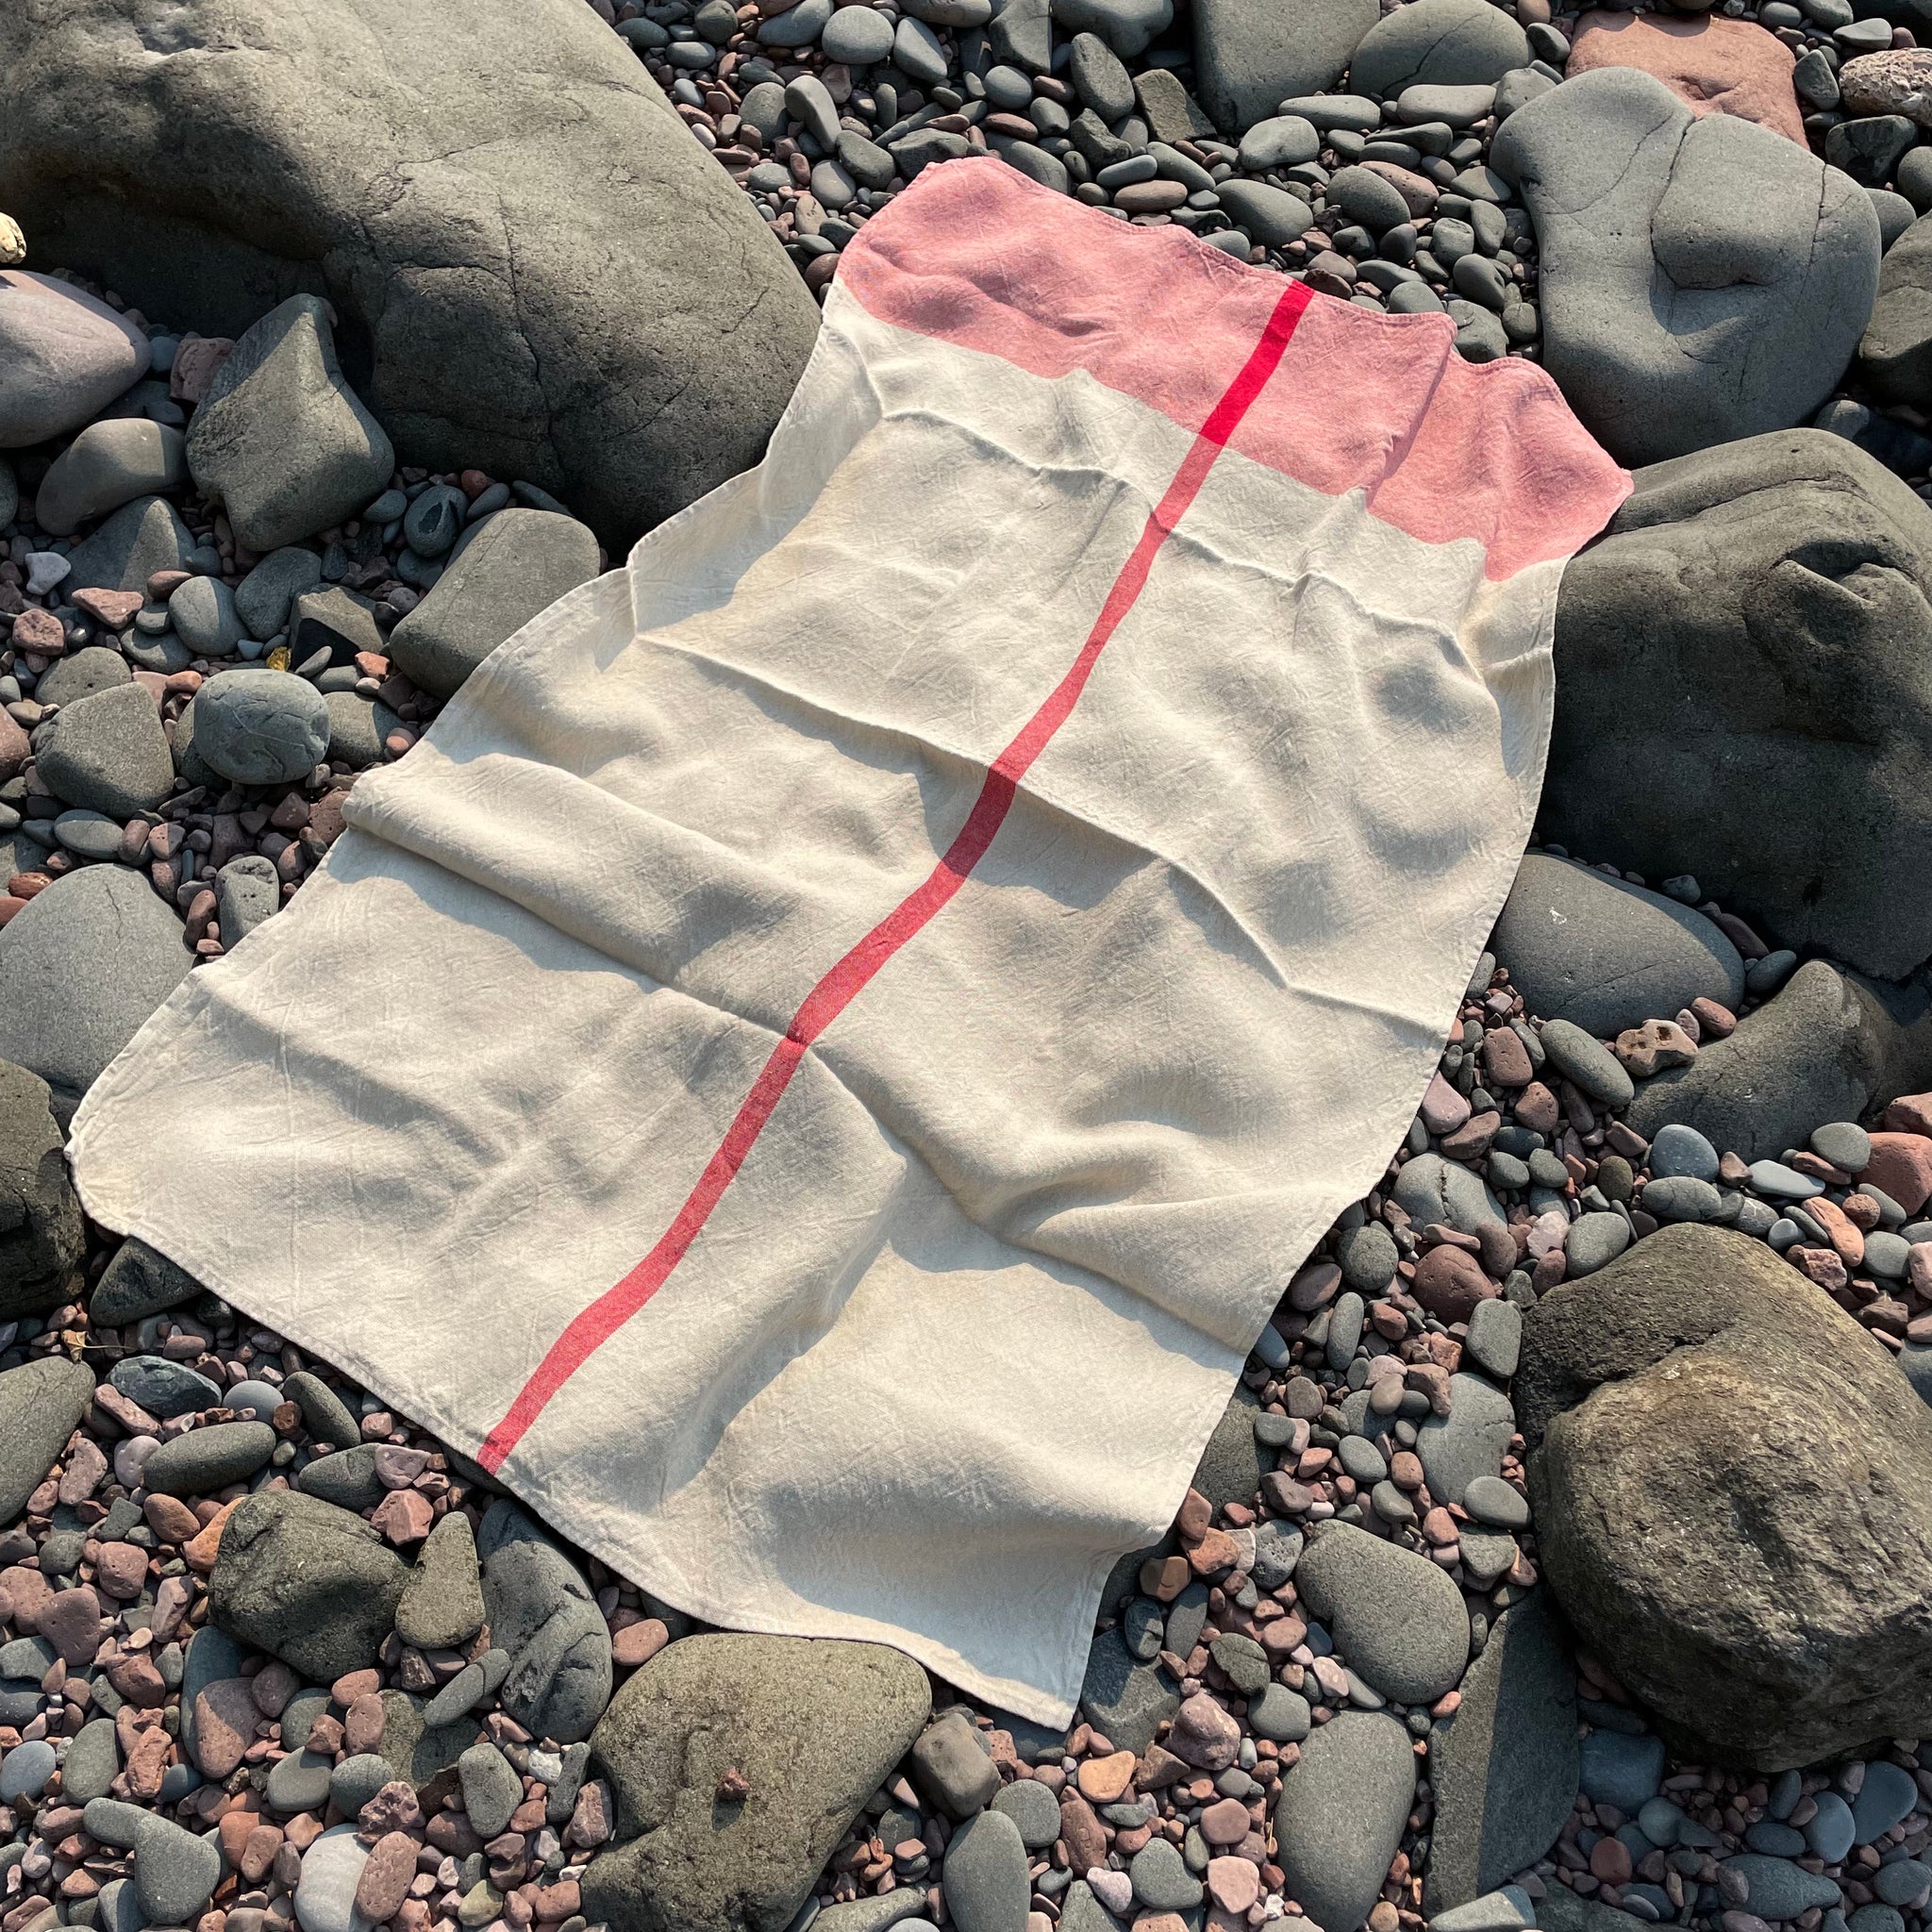 100% Linen Wash Cloths Our Best Selling Linen Washcloth – goodlinens